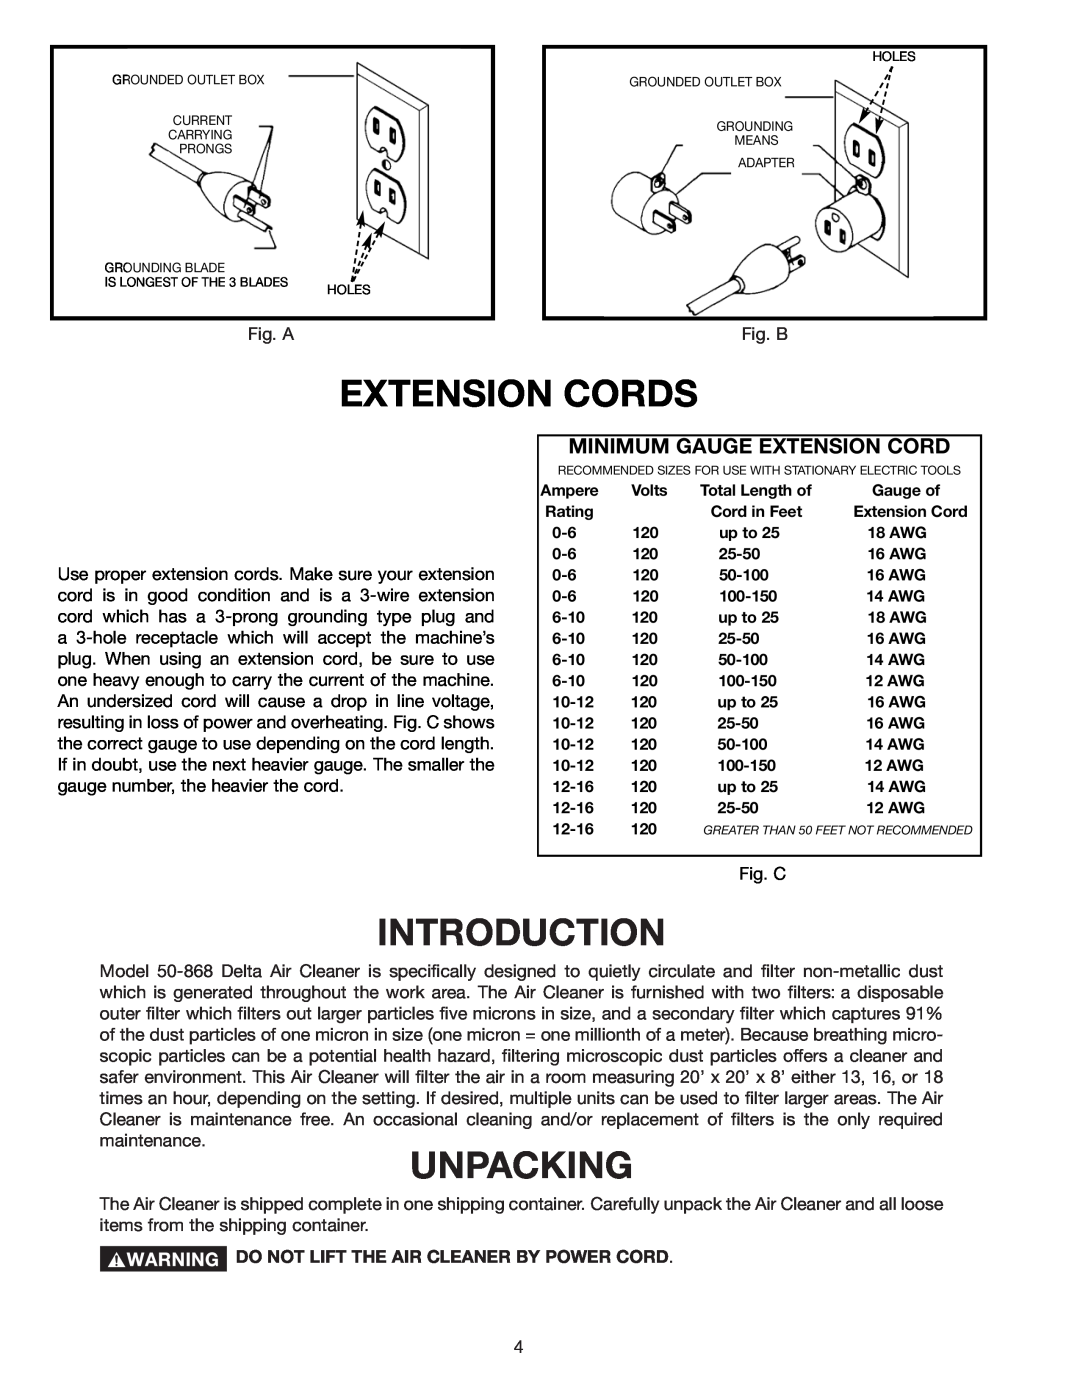 Deltaco 50-868 instruction manual Extension Cords, Introduction, Unpacking, Minimum Gauge Extension Cord 